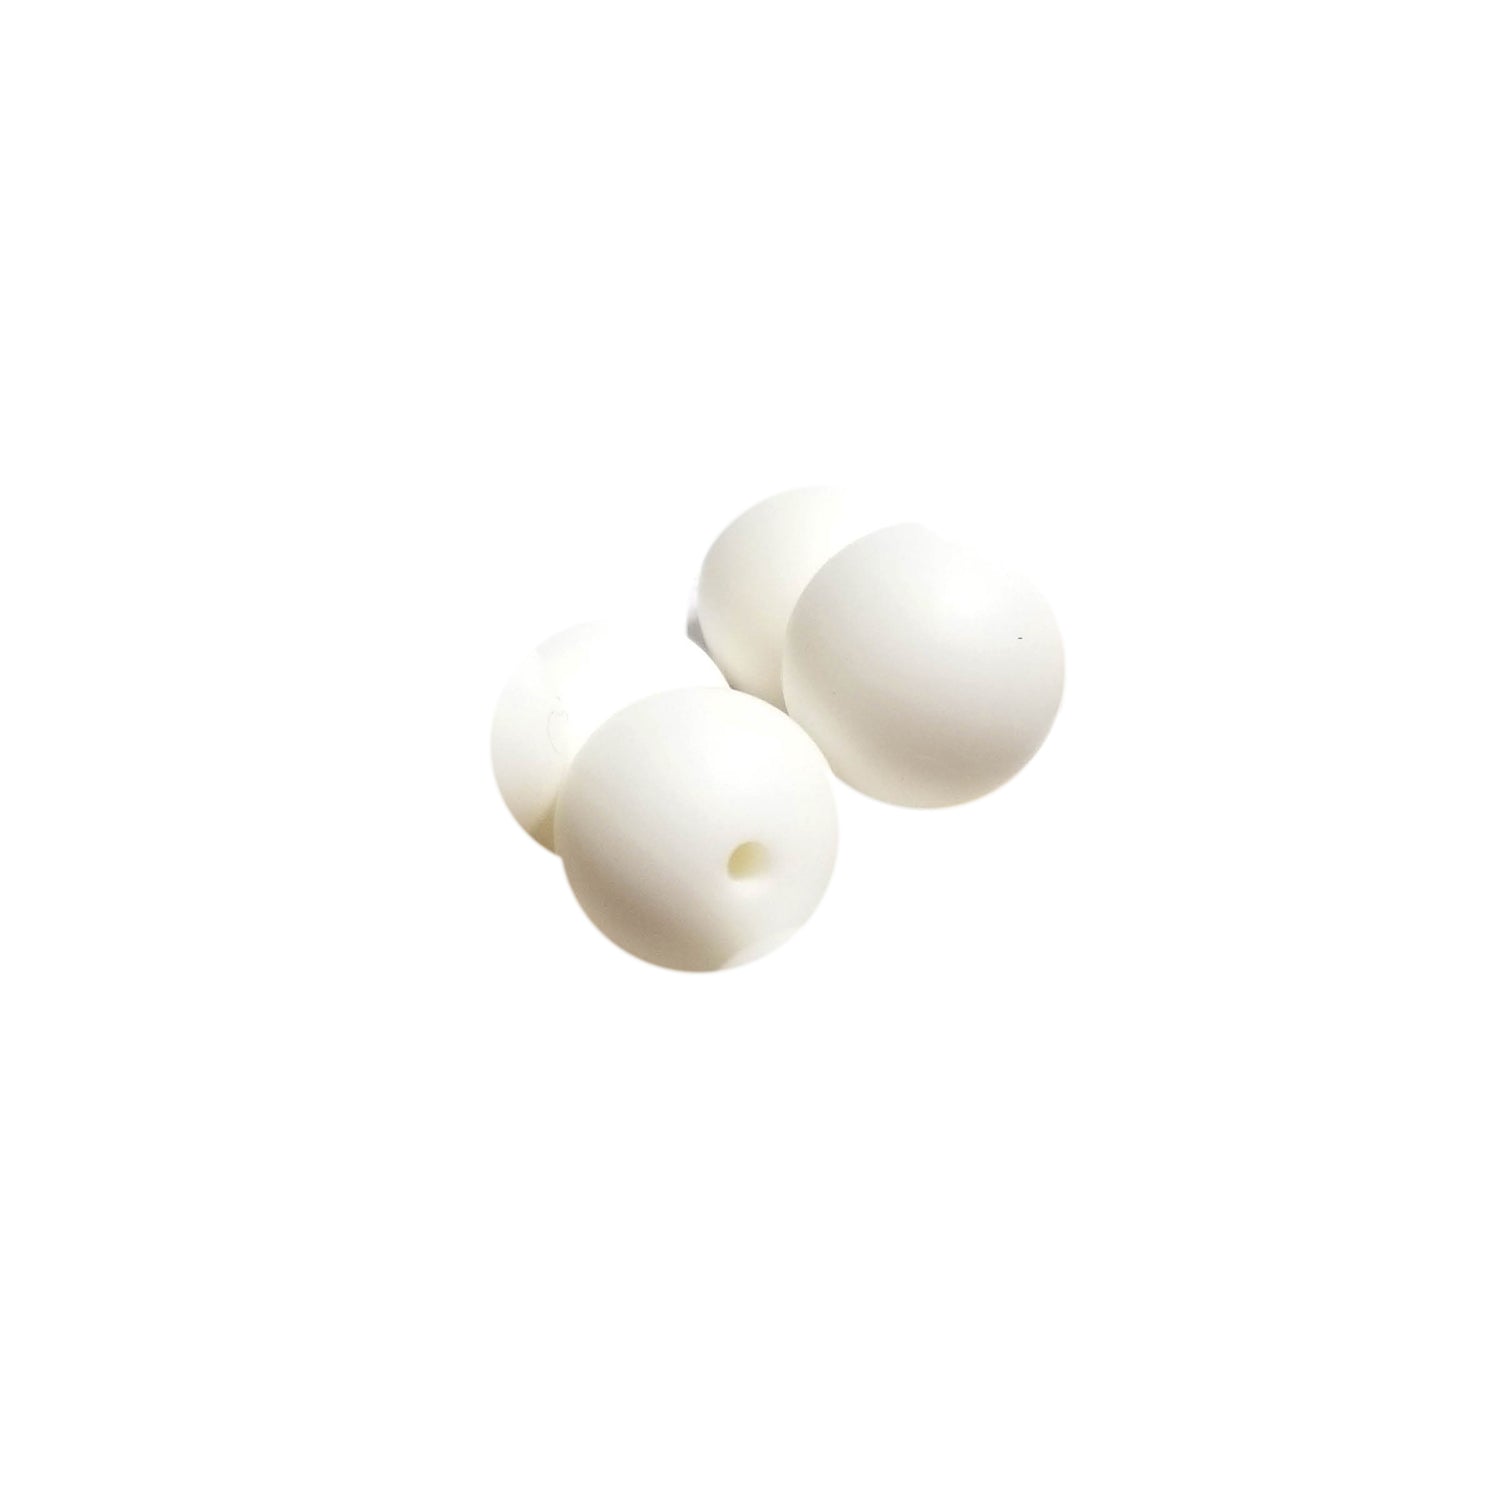 15mm white round silicone beads